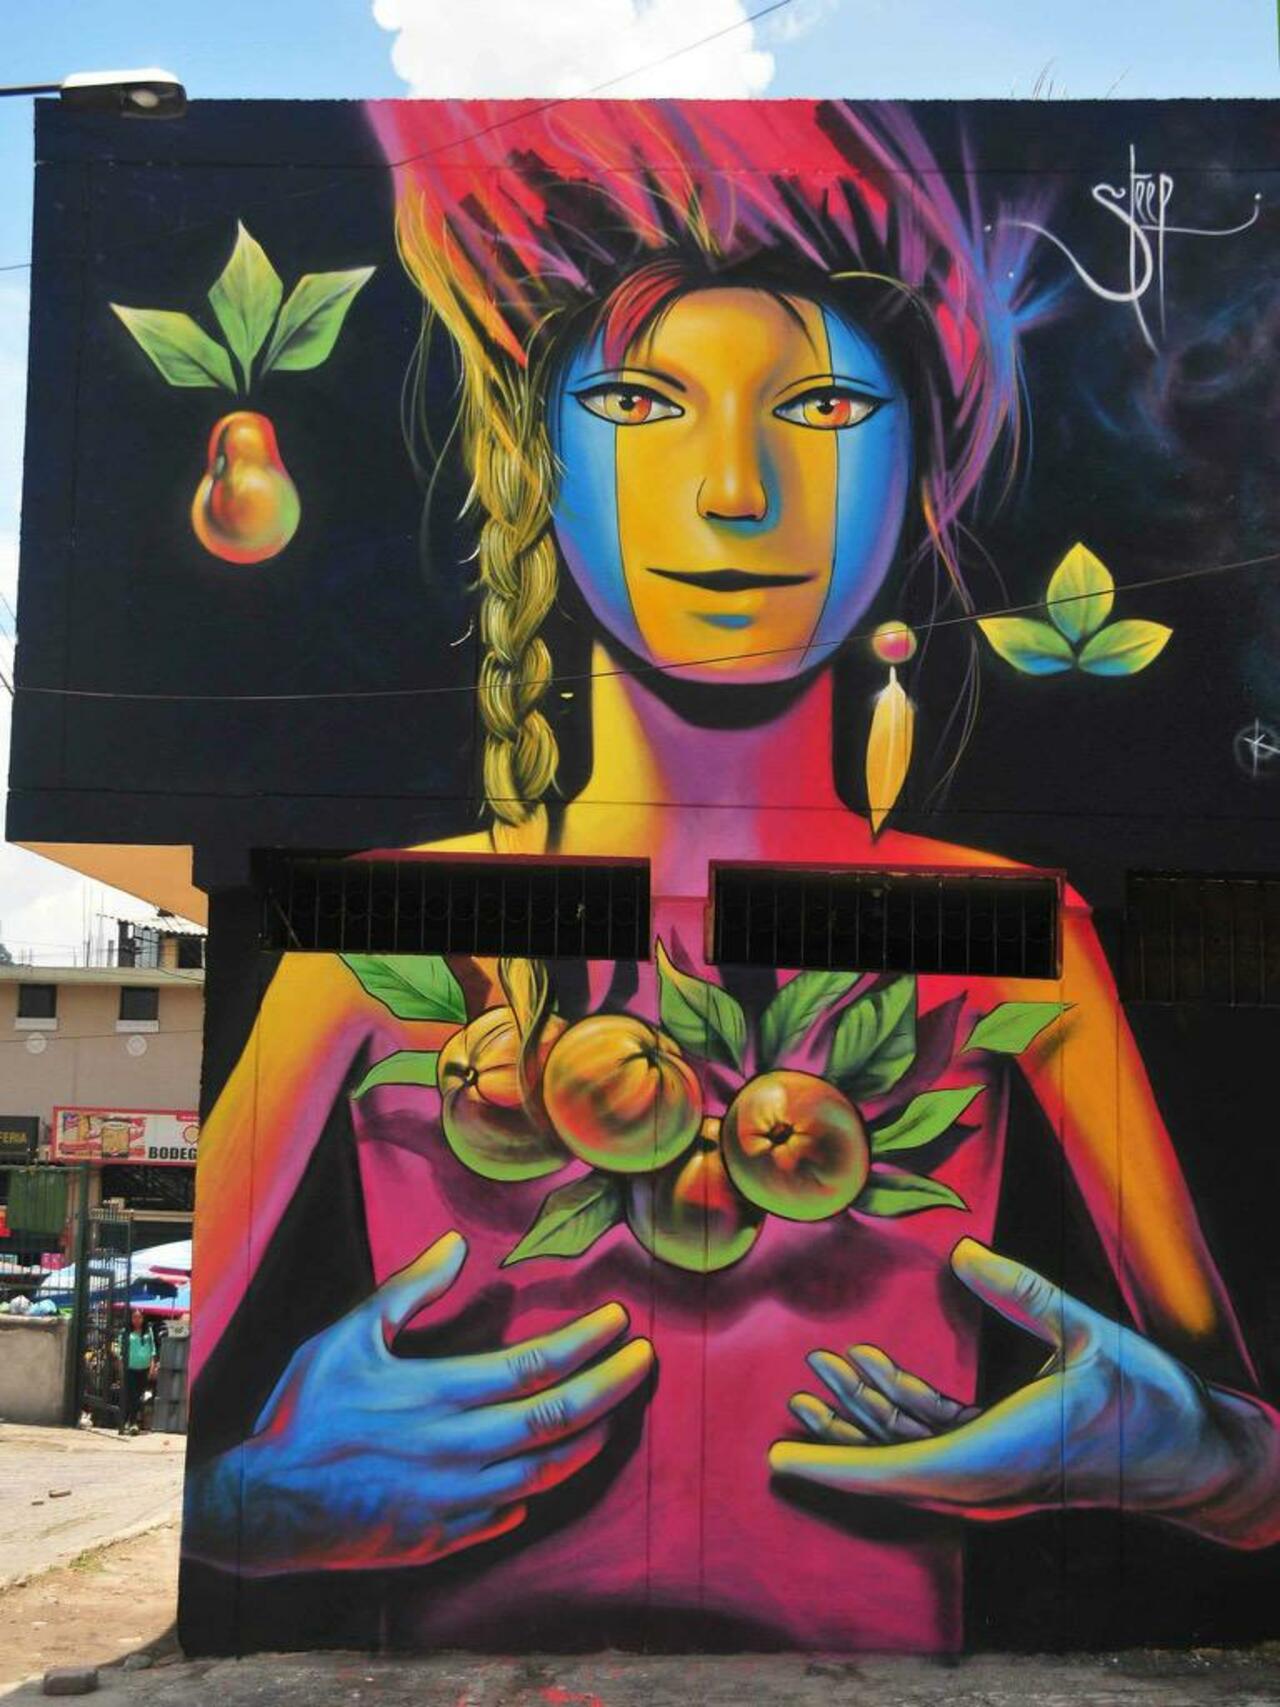 Street Art by Steep #art #graffiti #mural #streetart http://t.co/dKGIfl0HiR http://twitter.com/GoogleStreetArt/status/652717552435638272/photo/1/large?utm_source=fb&utm_medium=fb&utm_campaign=charlesjackso14&utm_content=652720469402103808 … … … … http://twitter.com/GoogleStreetArt/status/652717552435638272/photo/1/large?utm_source=fb&utm_medium=fb&utm_campaign=charlesjackso14&utm_content=652728483173507072